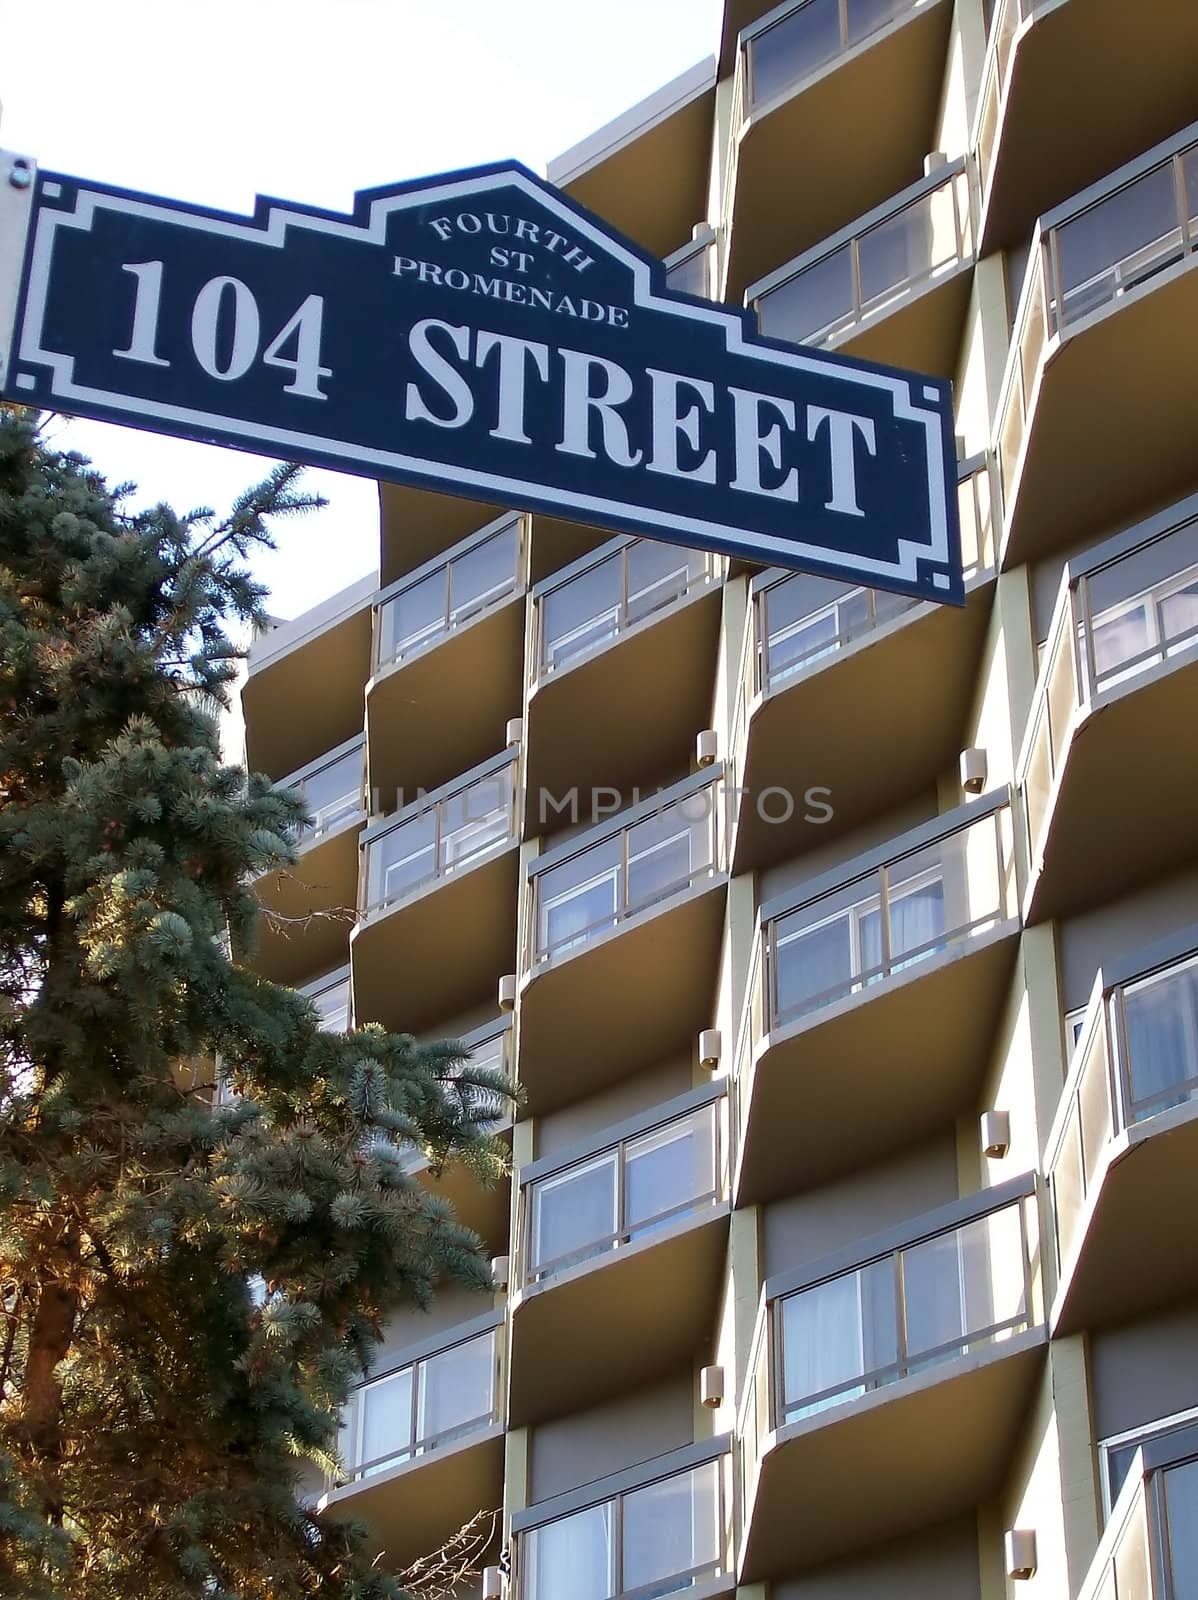 104 Street by watamyr